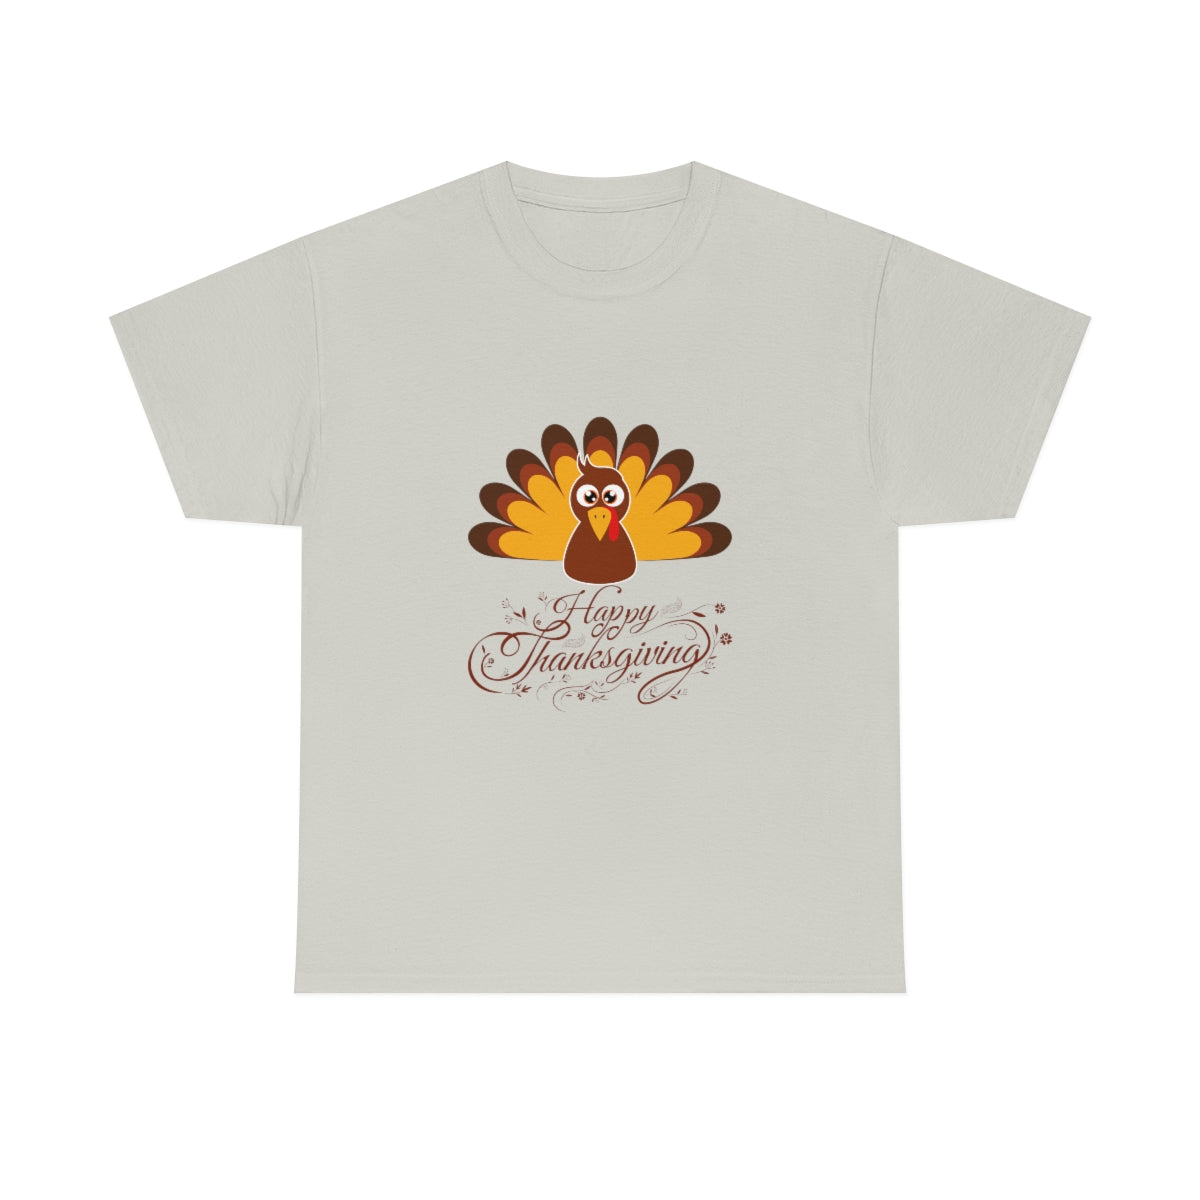 Thanksgiving Tshirt Turkey T-shirt Give Thanks Tee Gratitude Thankful Shirt Adult Fall Tees Autumn Apparel Cute Shirts Women Cute Fall Tee - The Good Life Vibe